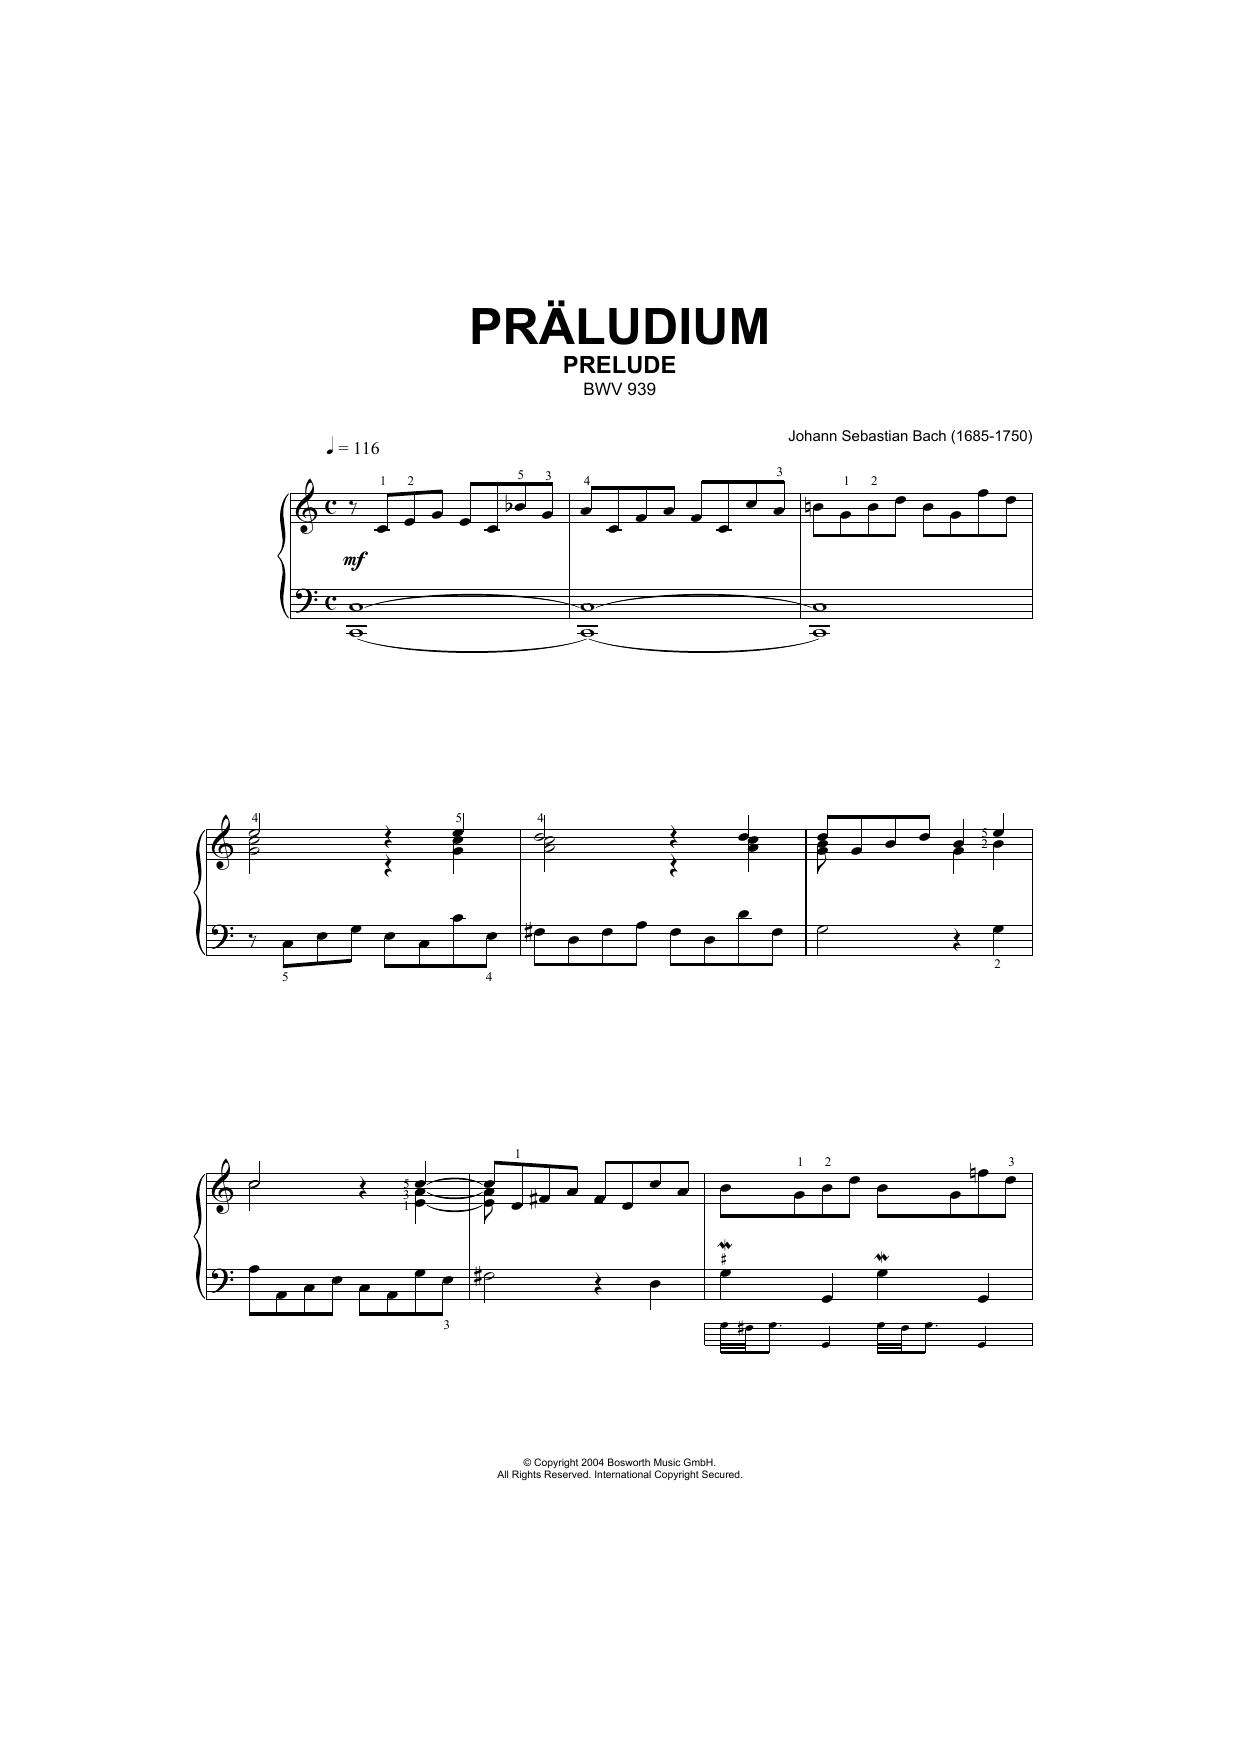 Johann Sebastian Bach Prelude, BWV 939 Sheet Music Notes & Chords for Piano - Download or Print PDF